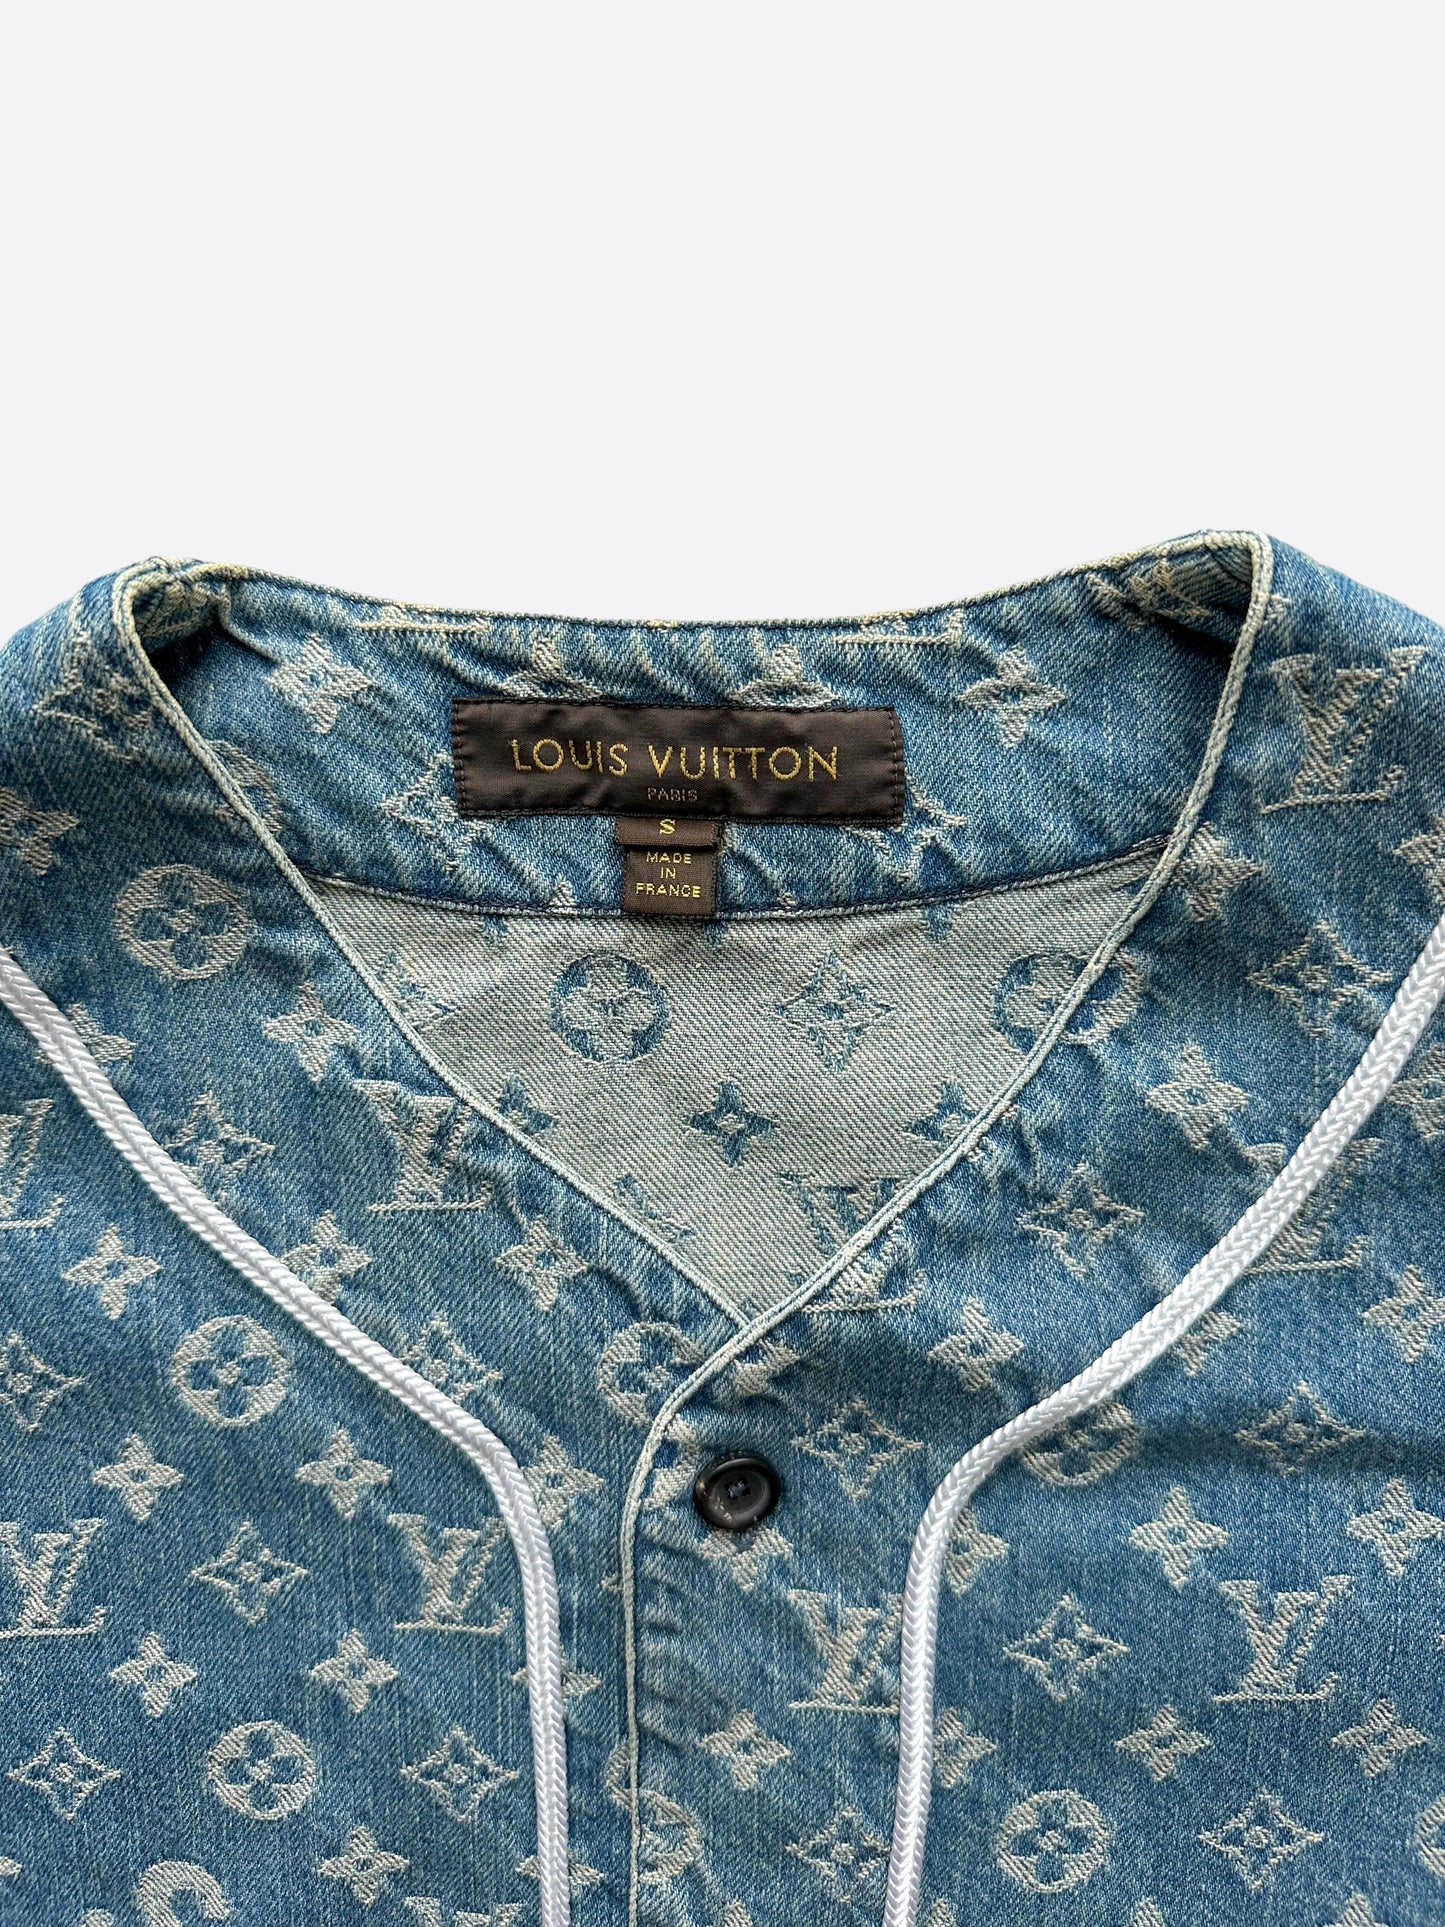 Supreme x Louis Vuitton All Over Monogram Denim Baseball Jersey